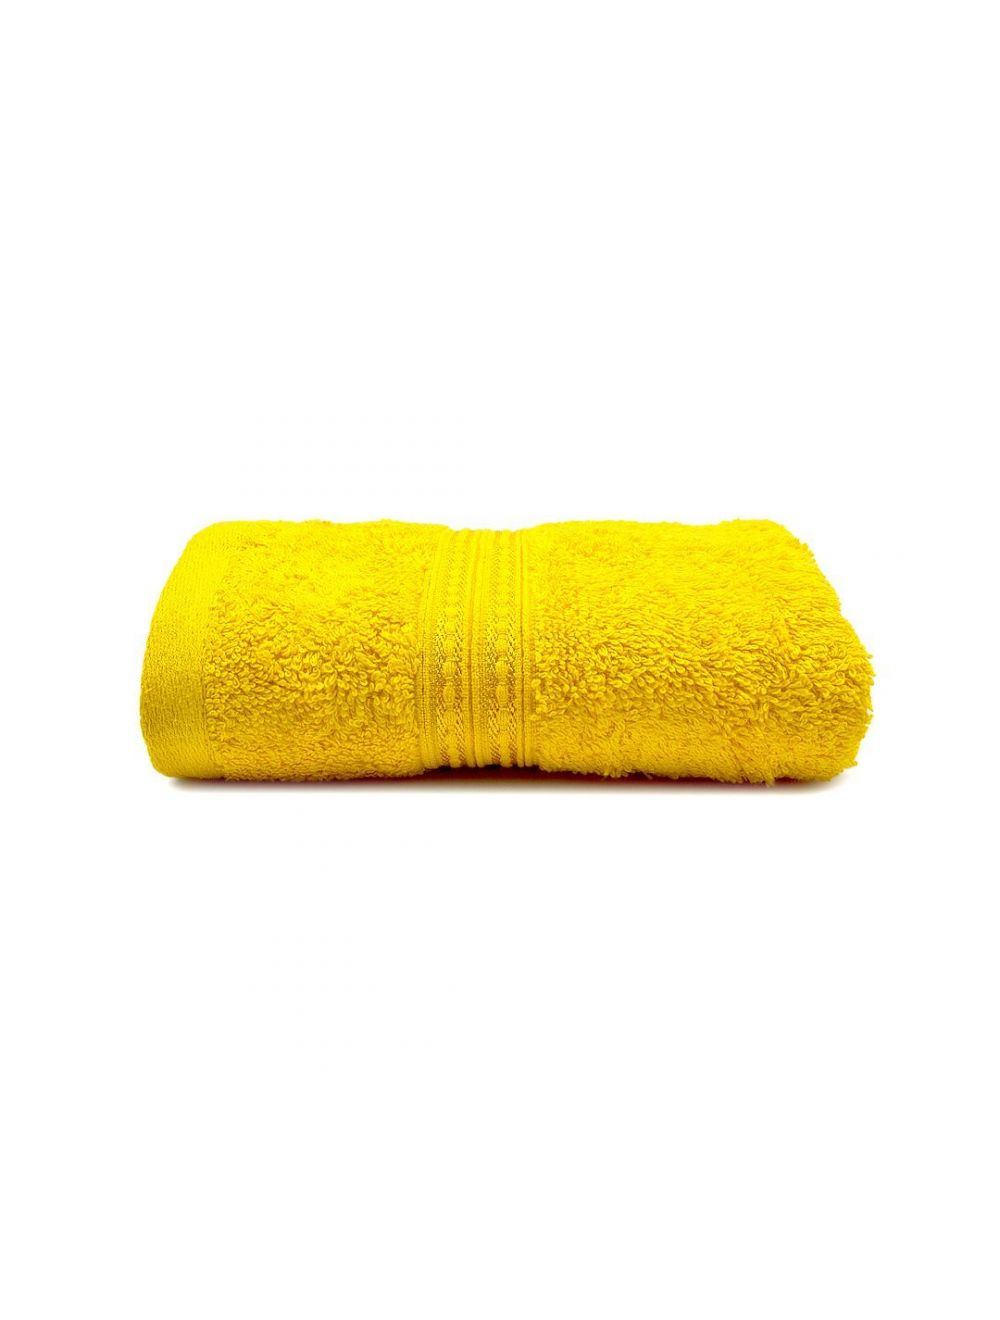 Rahalife 100% Cotton Hand Towel, Classic Collection, Yellow  -14RLHT019